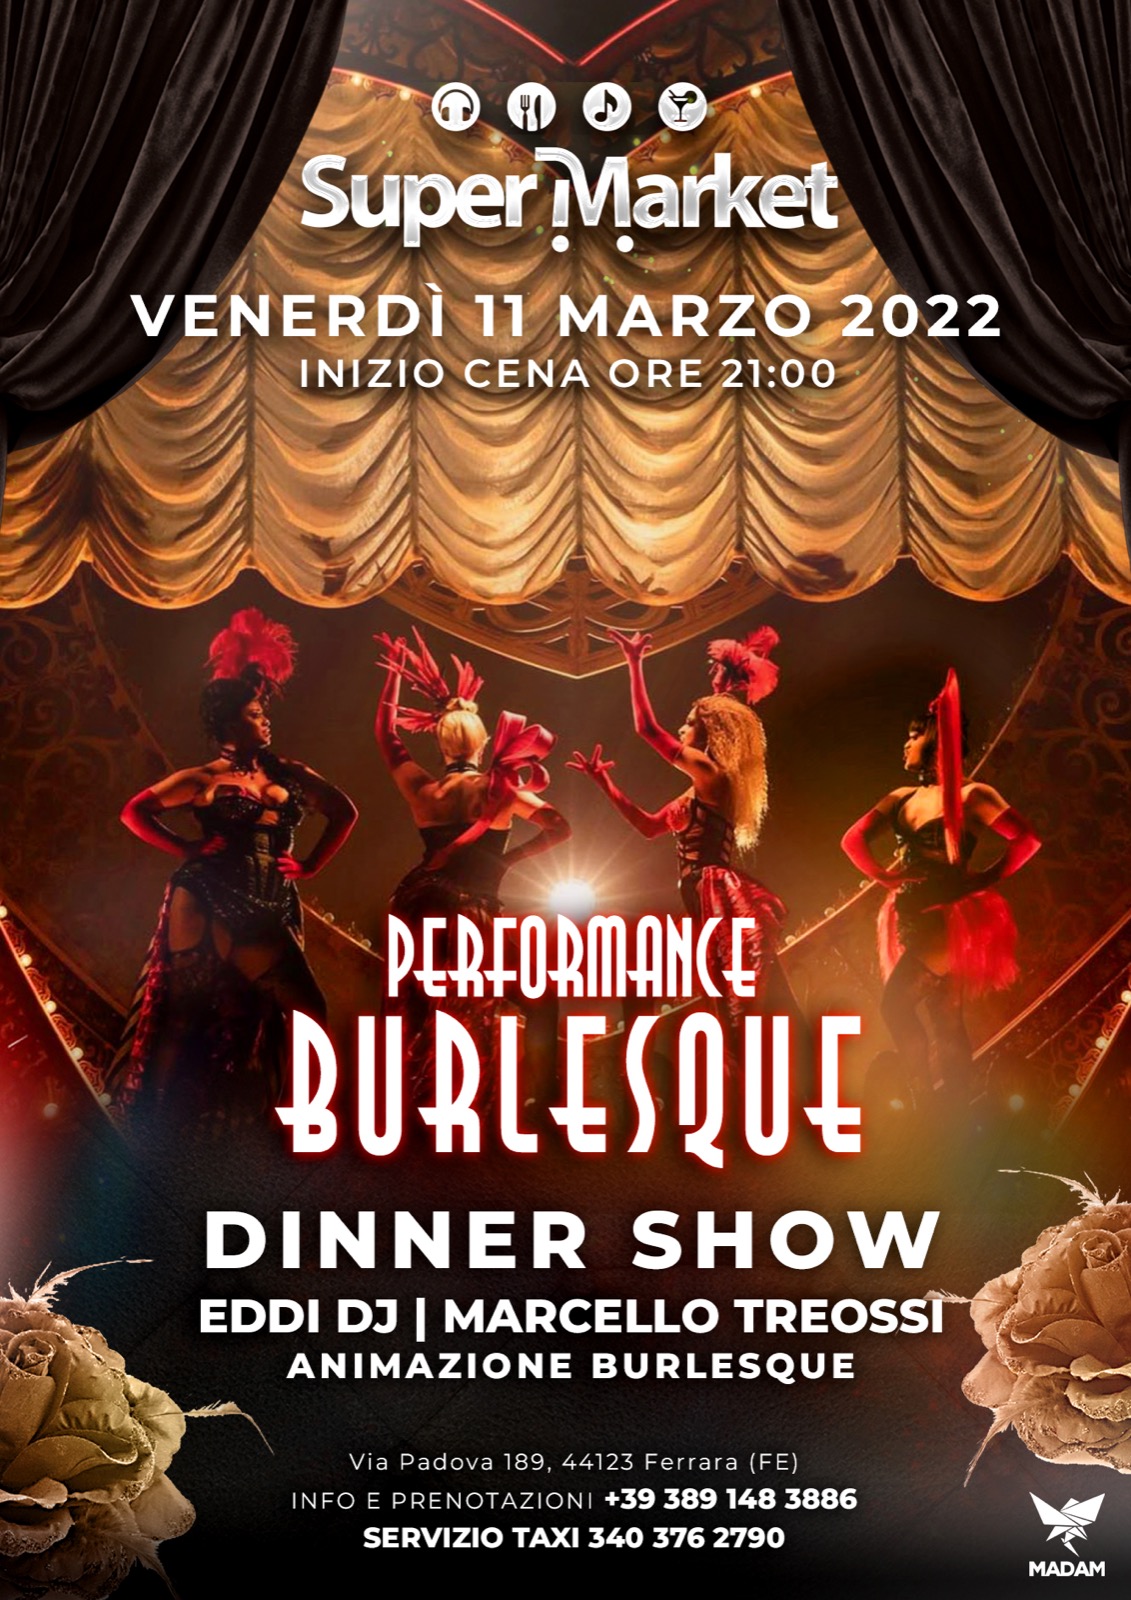 SuperMarket venerdì 11 marzo 2022 – Burlesque